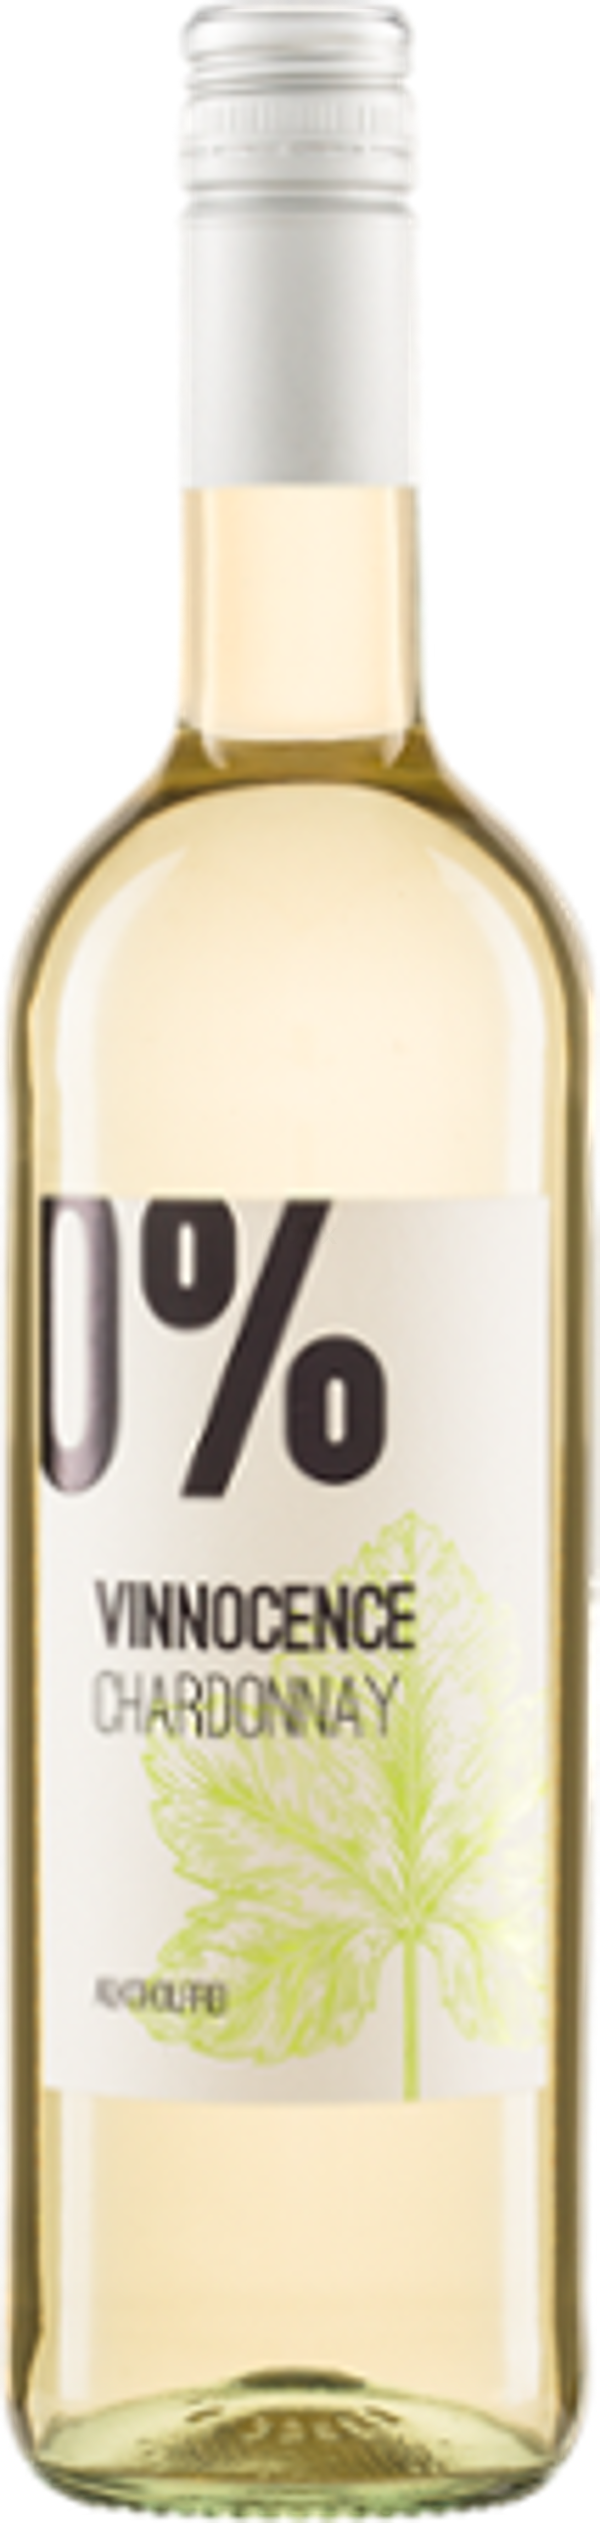 Produktfoto zu Vinnocence Chardonnay alkoholfrei 0,75l